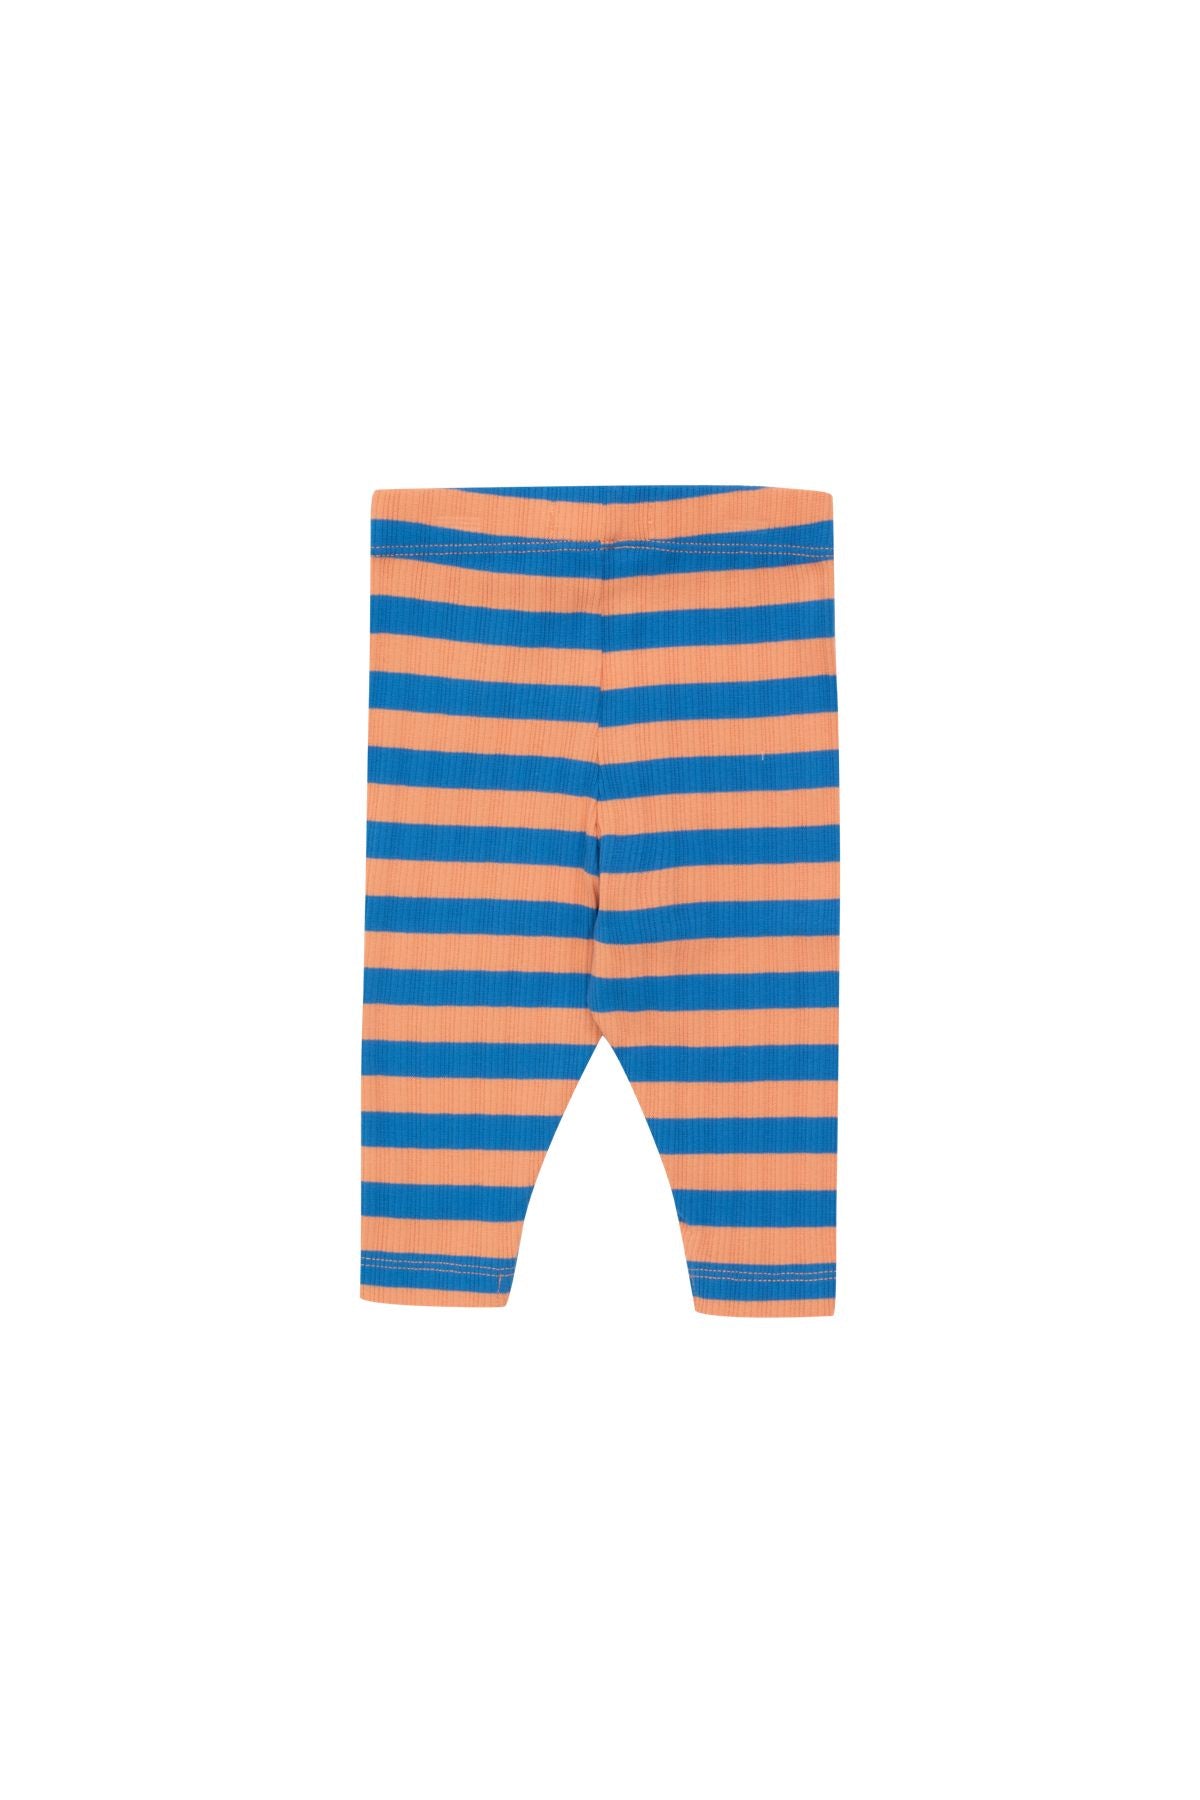 Tiny Cottons Stripes Baby Pants -  Light Rust/ Blue